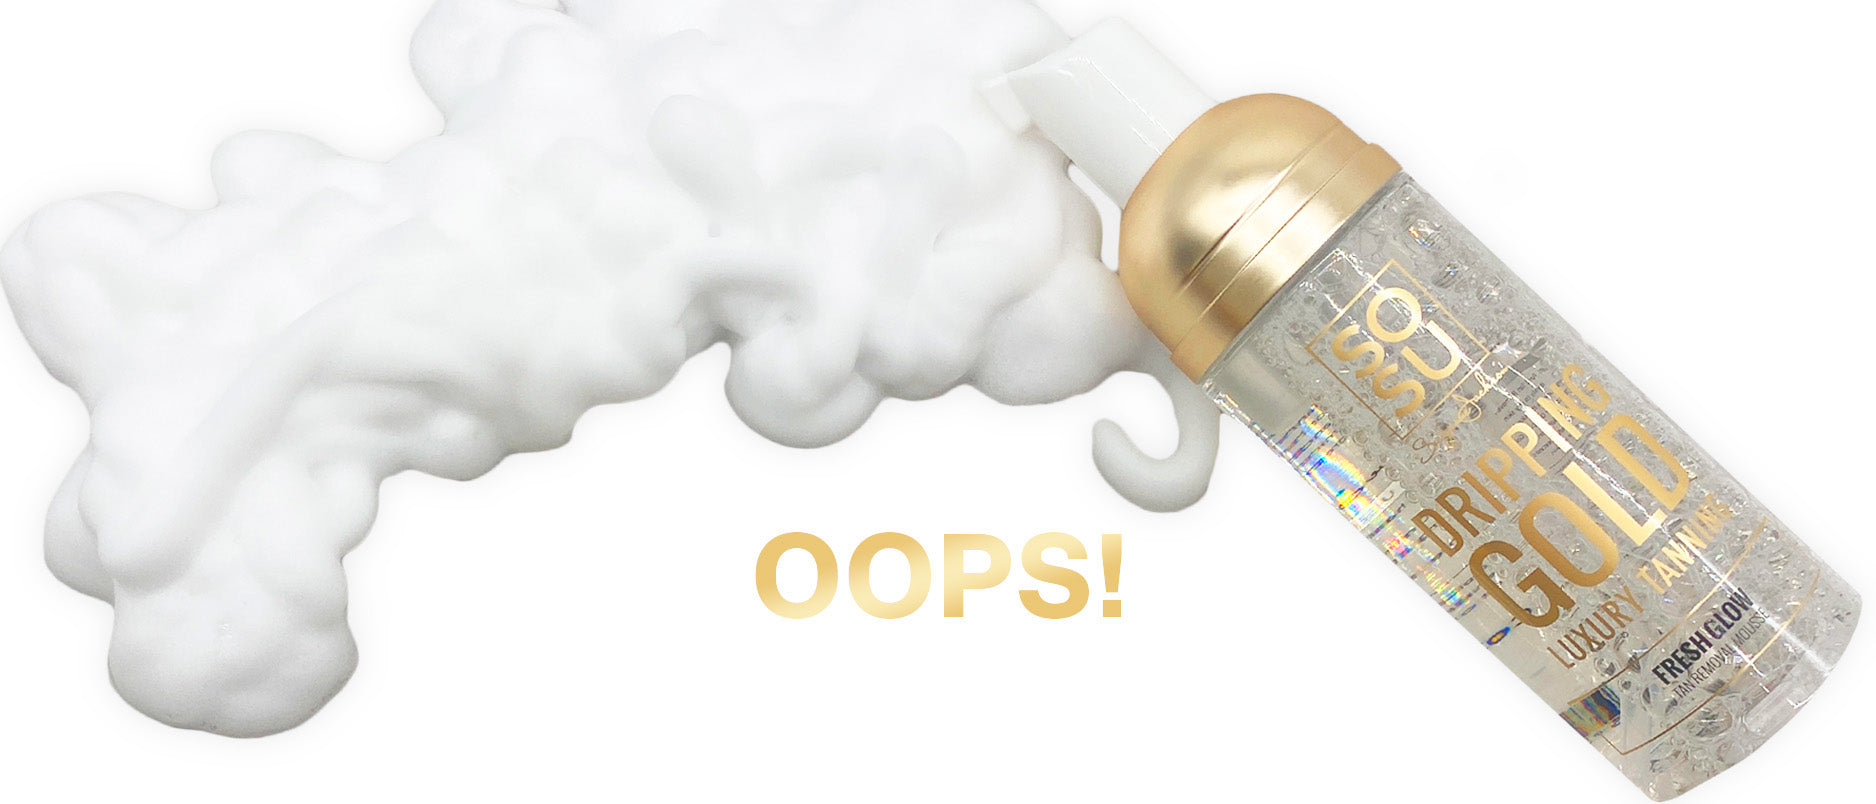 404 error page banner | luxury tanning  on white background